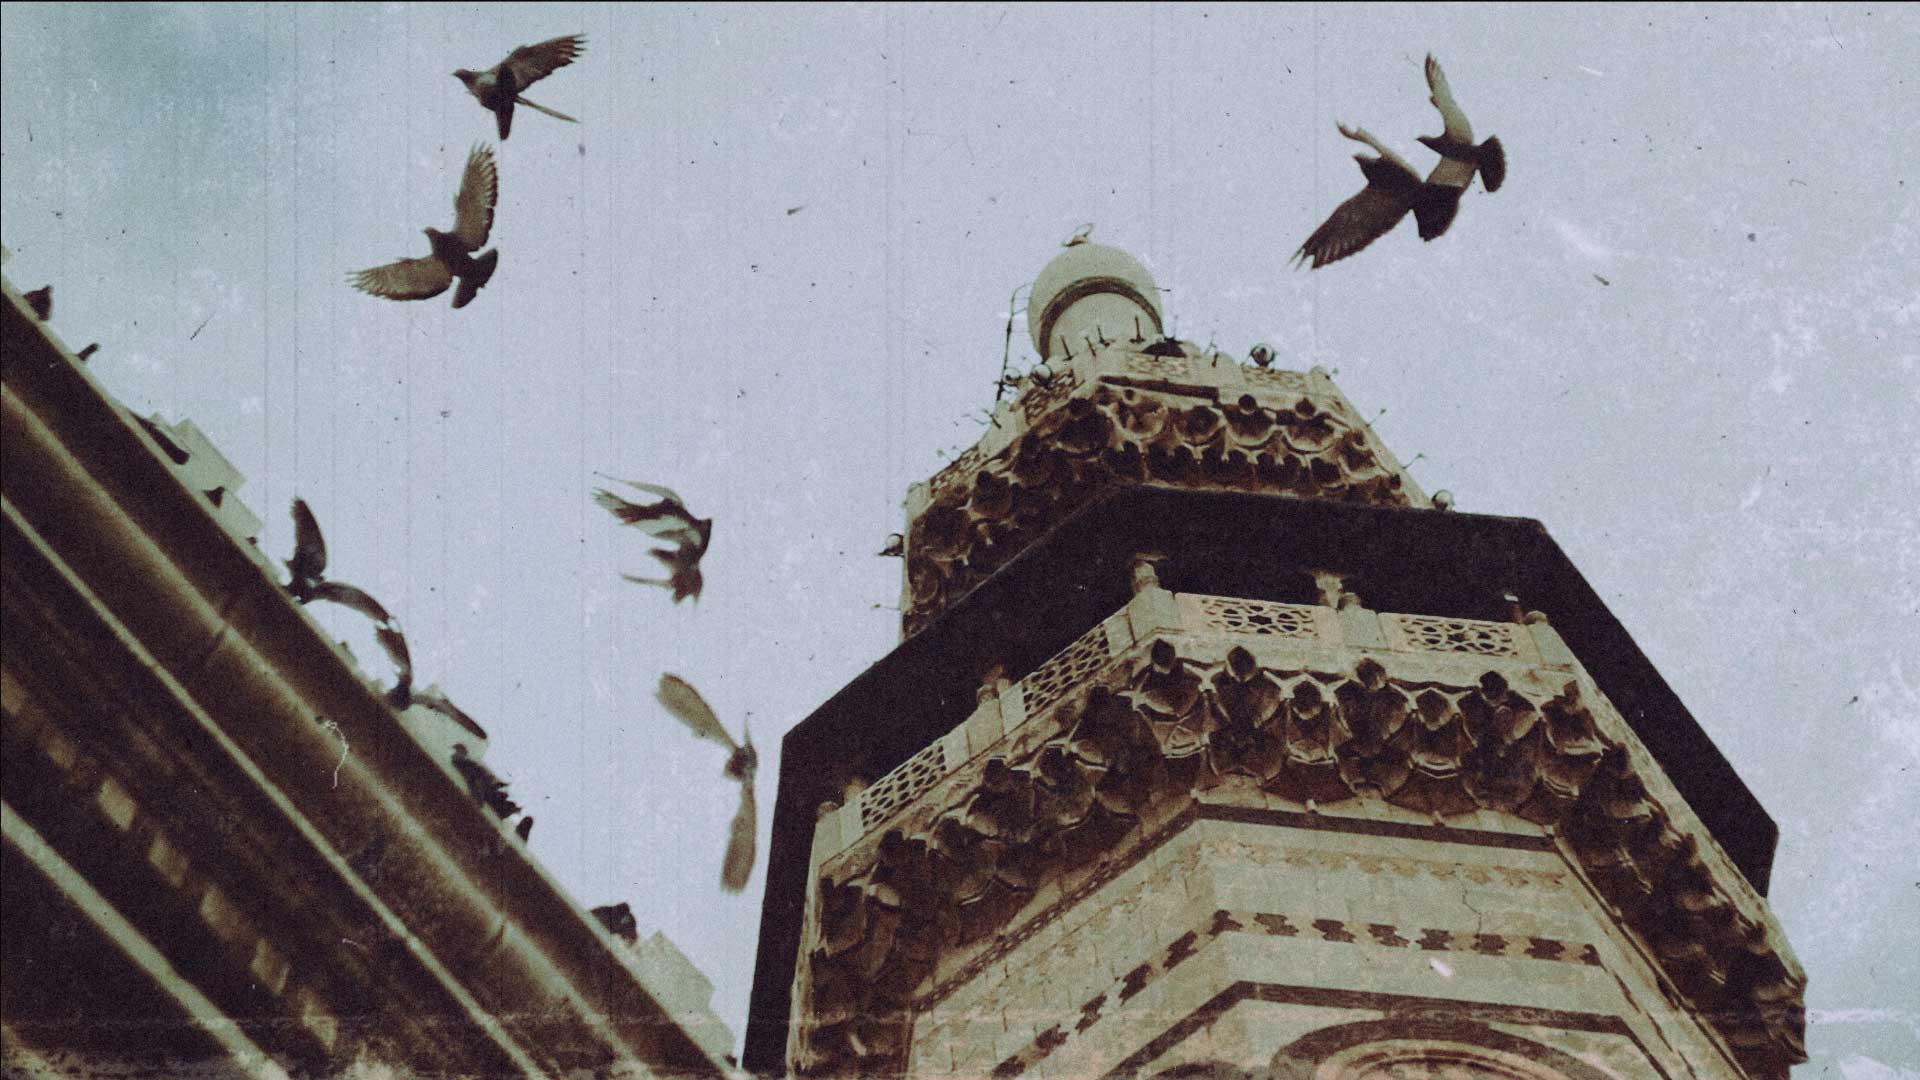 The Minaret of Qaitbay.